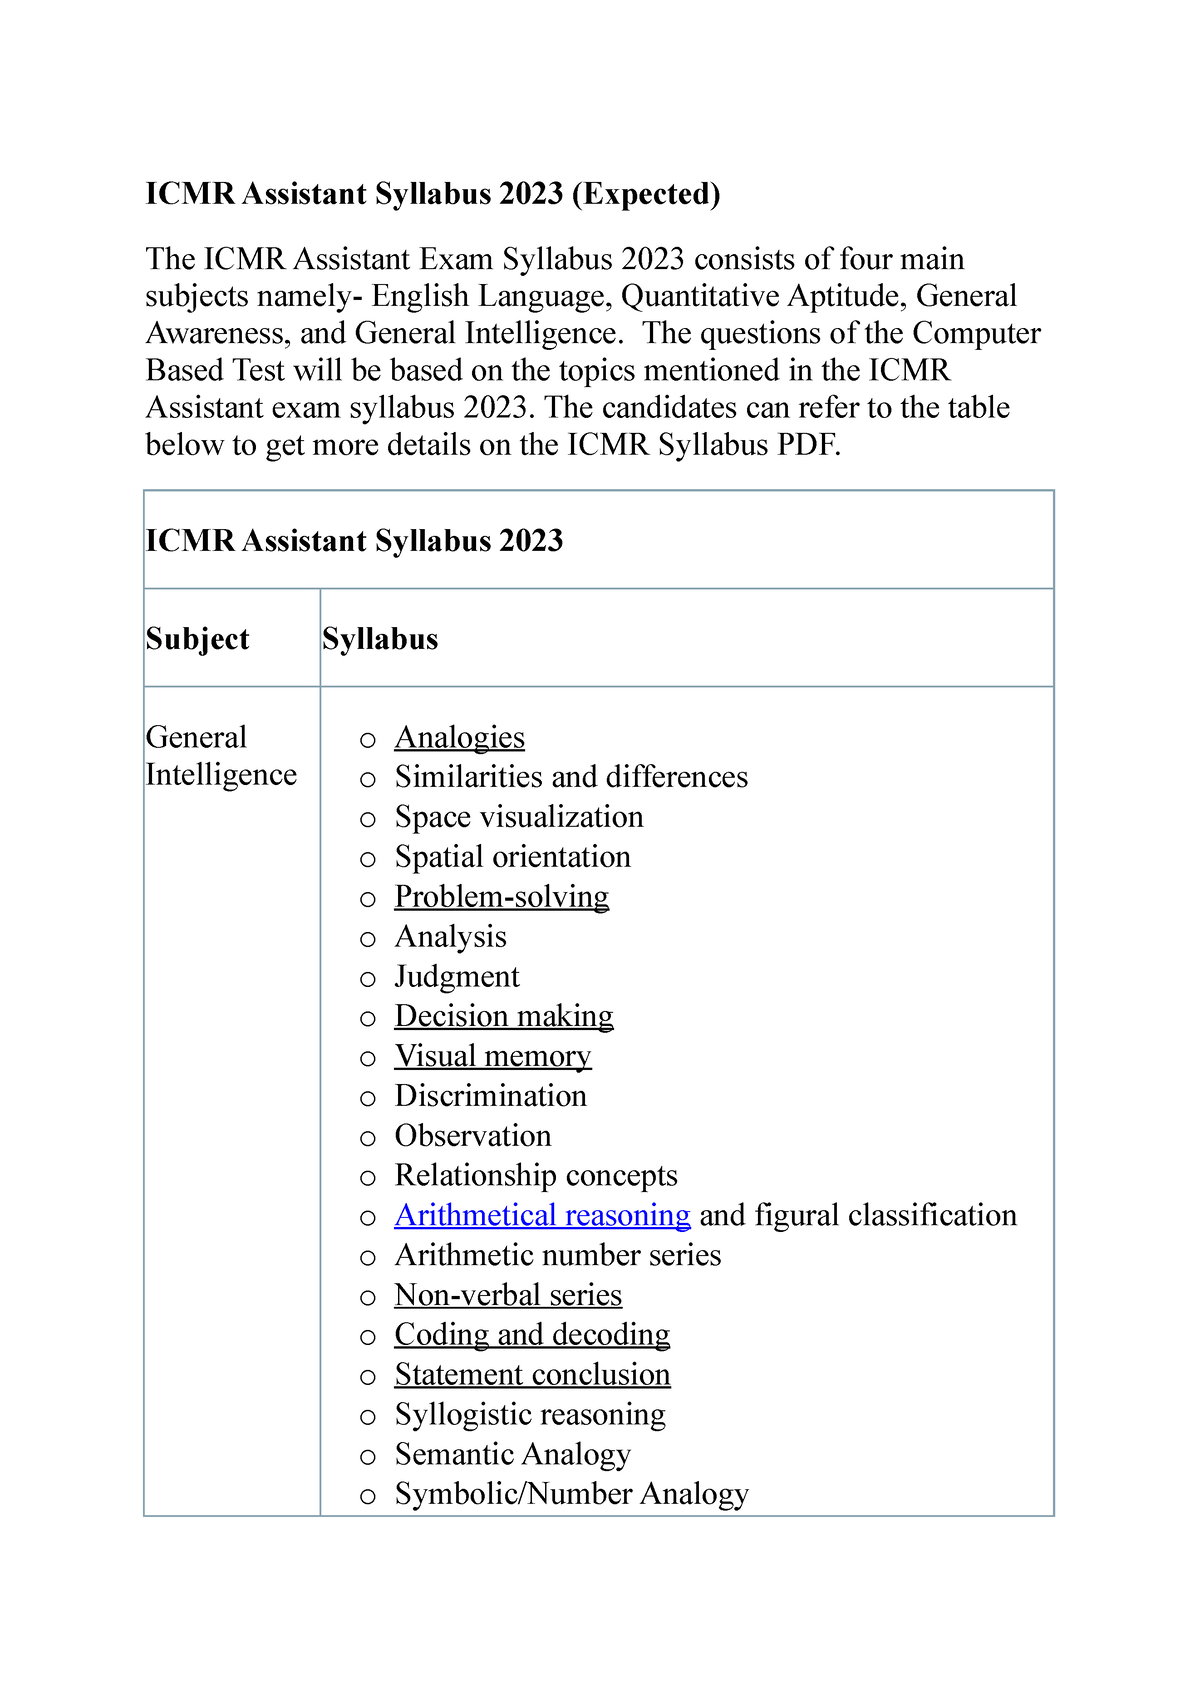 Analogy Exam PDF, PDF, Semantics